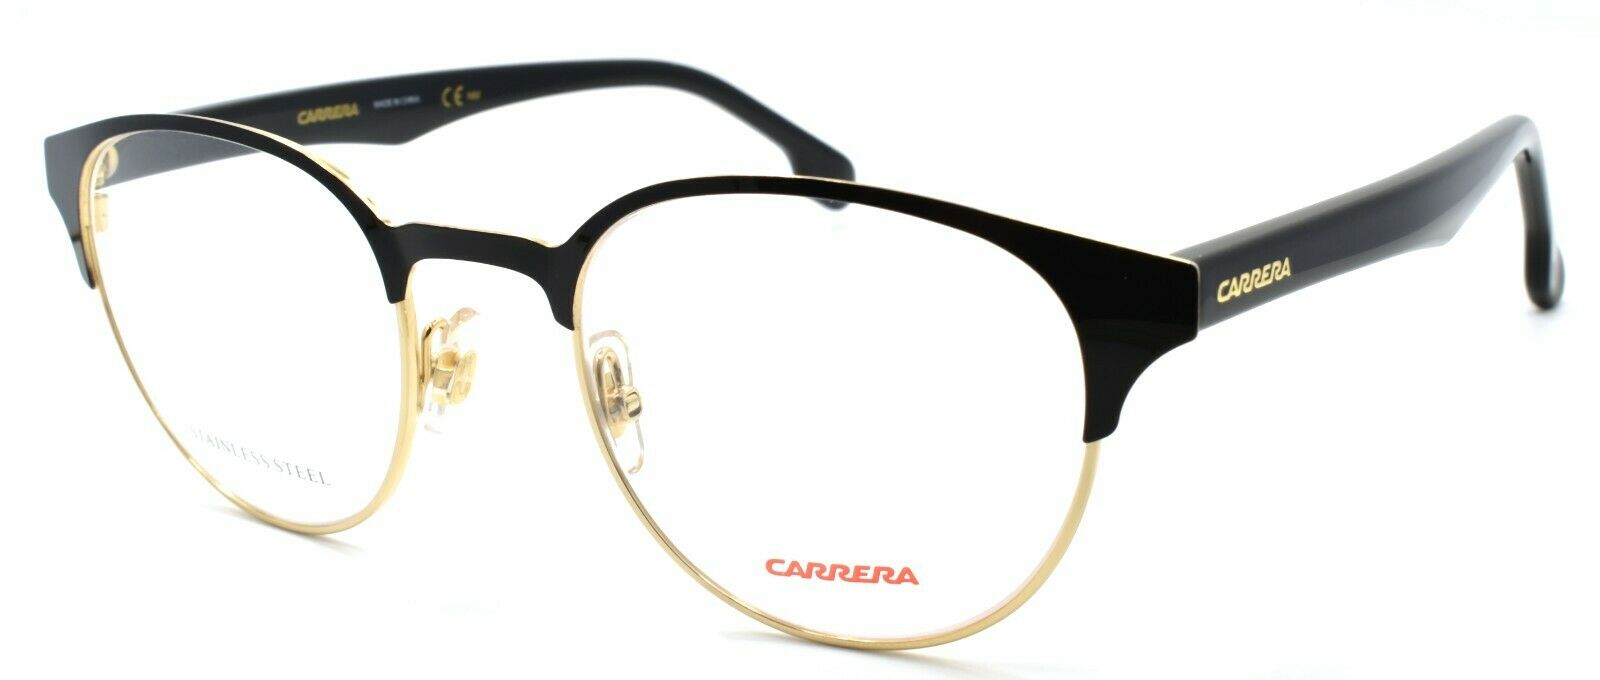 1-Carrera 139/V 807 Men's Eyeglasses Frames Round 49-21-150 Black / Gold-762753980175-IKSpecs